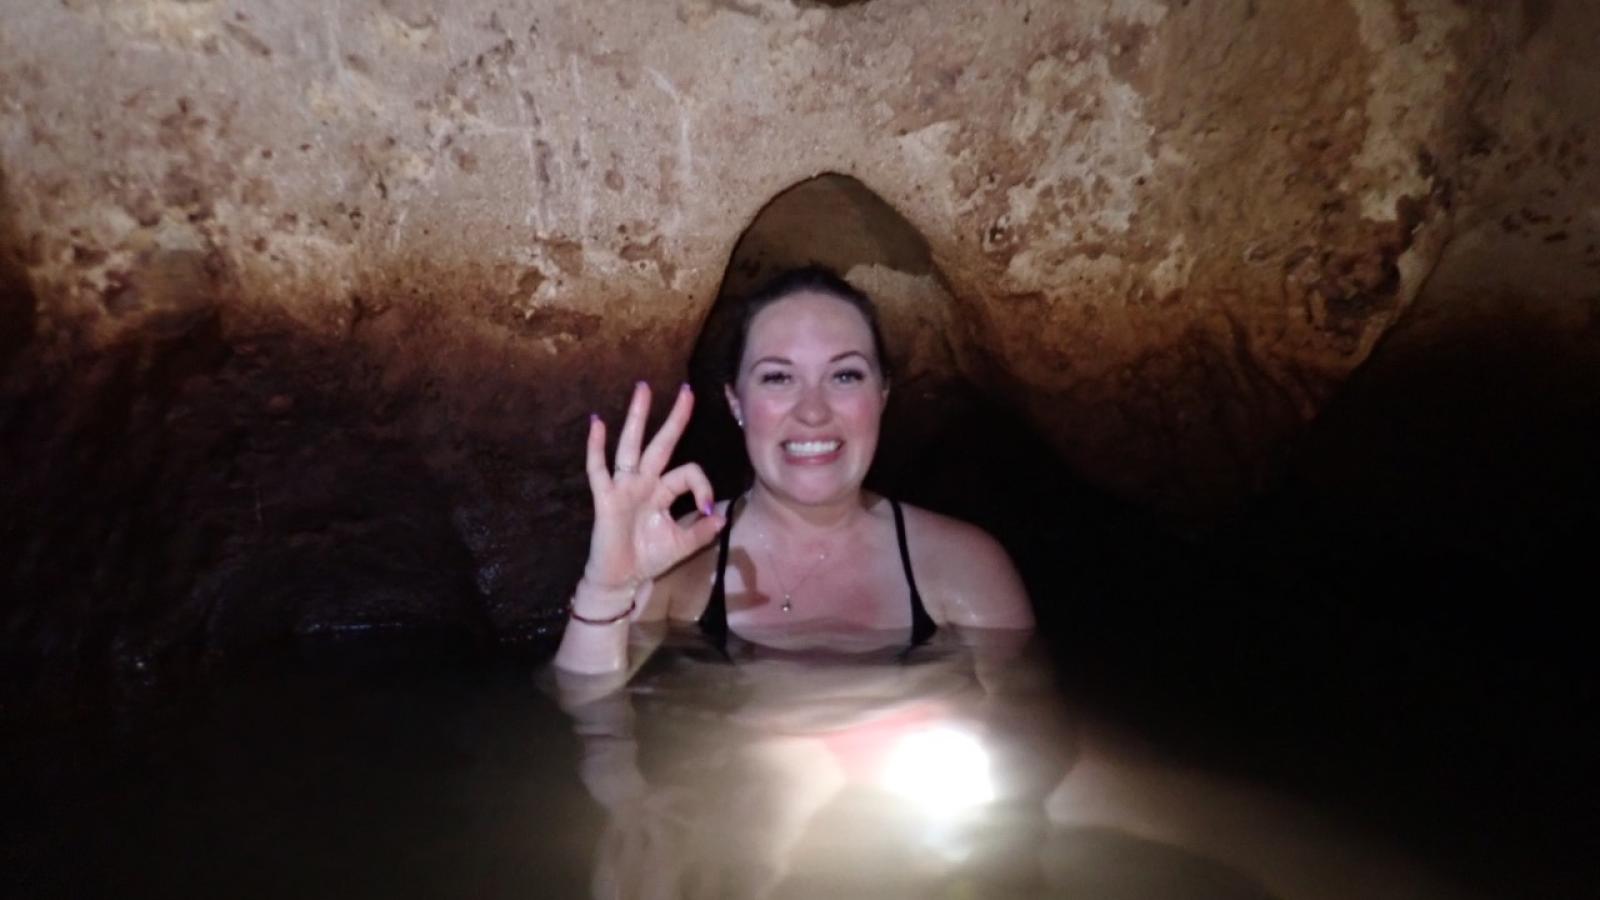 Miranda Manross swims in a cave.